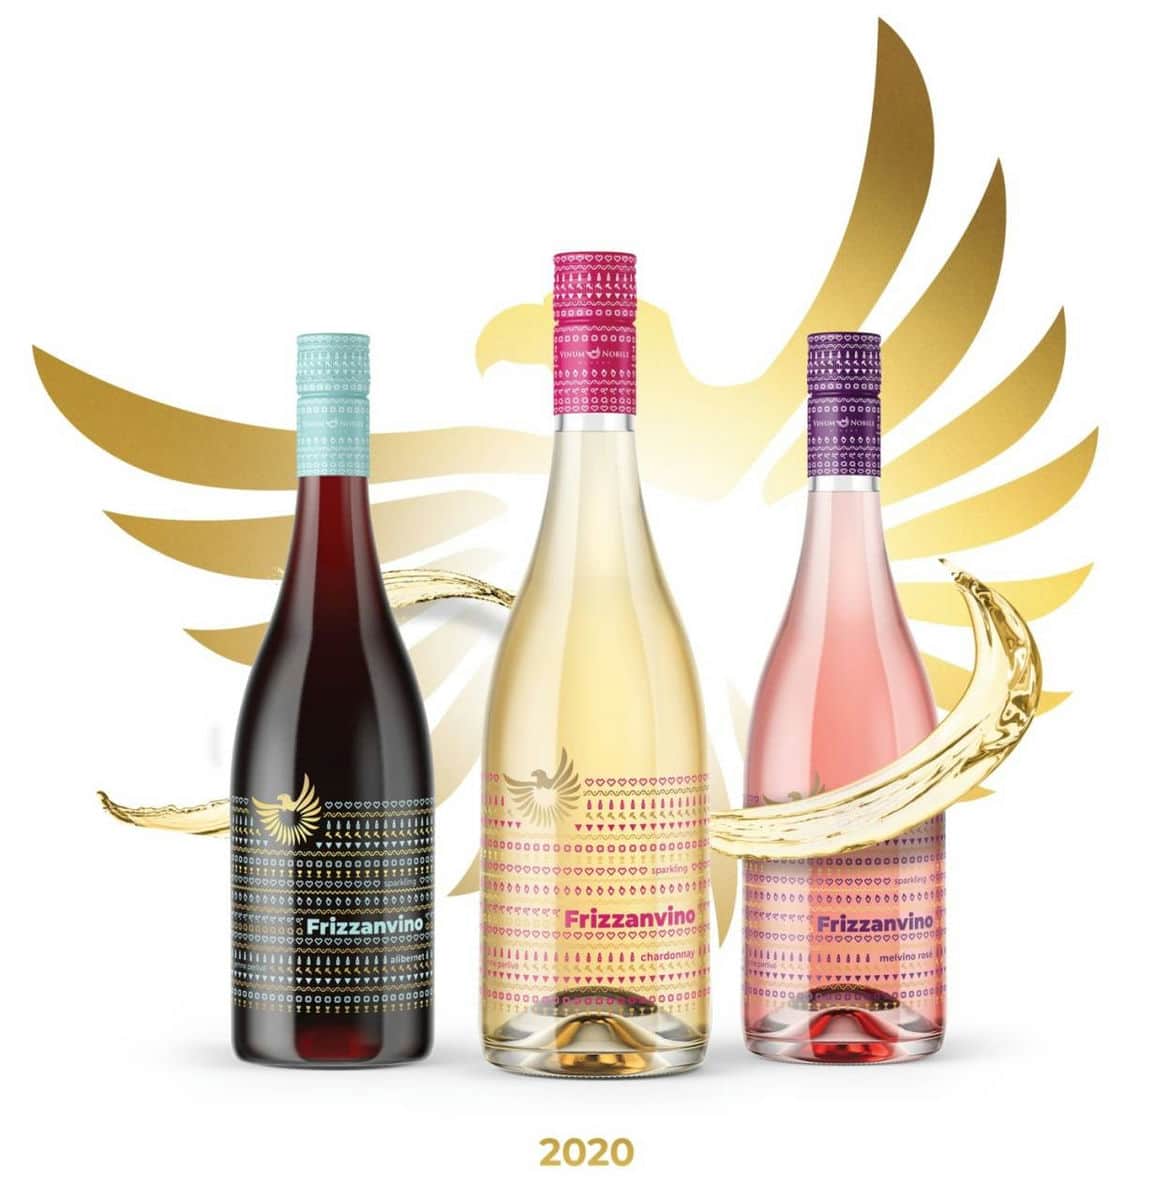 bannery web 2 1448x2048 1 | Vinum Nobile Winery | Slovenské vína svetovej kvality